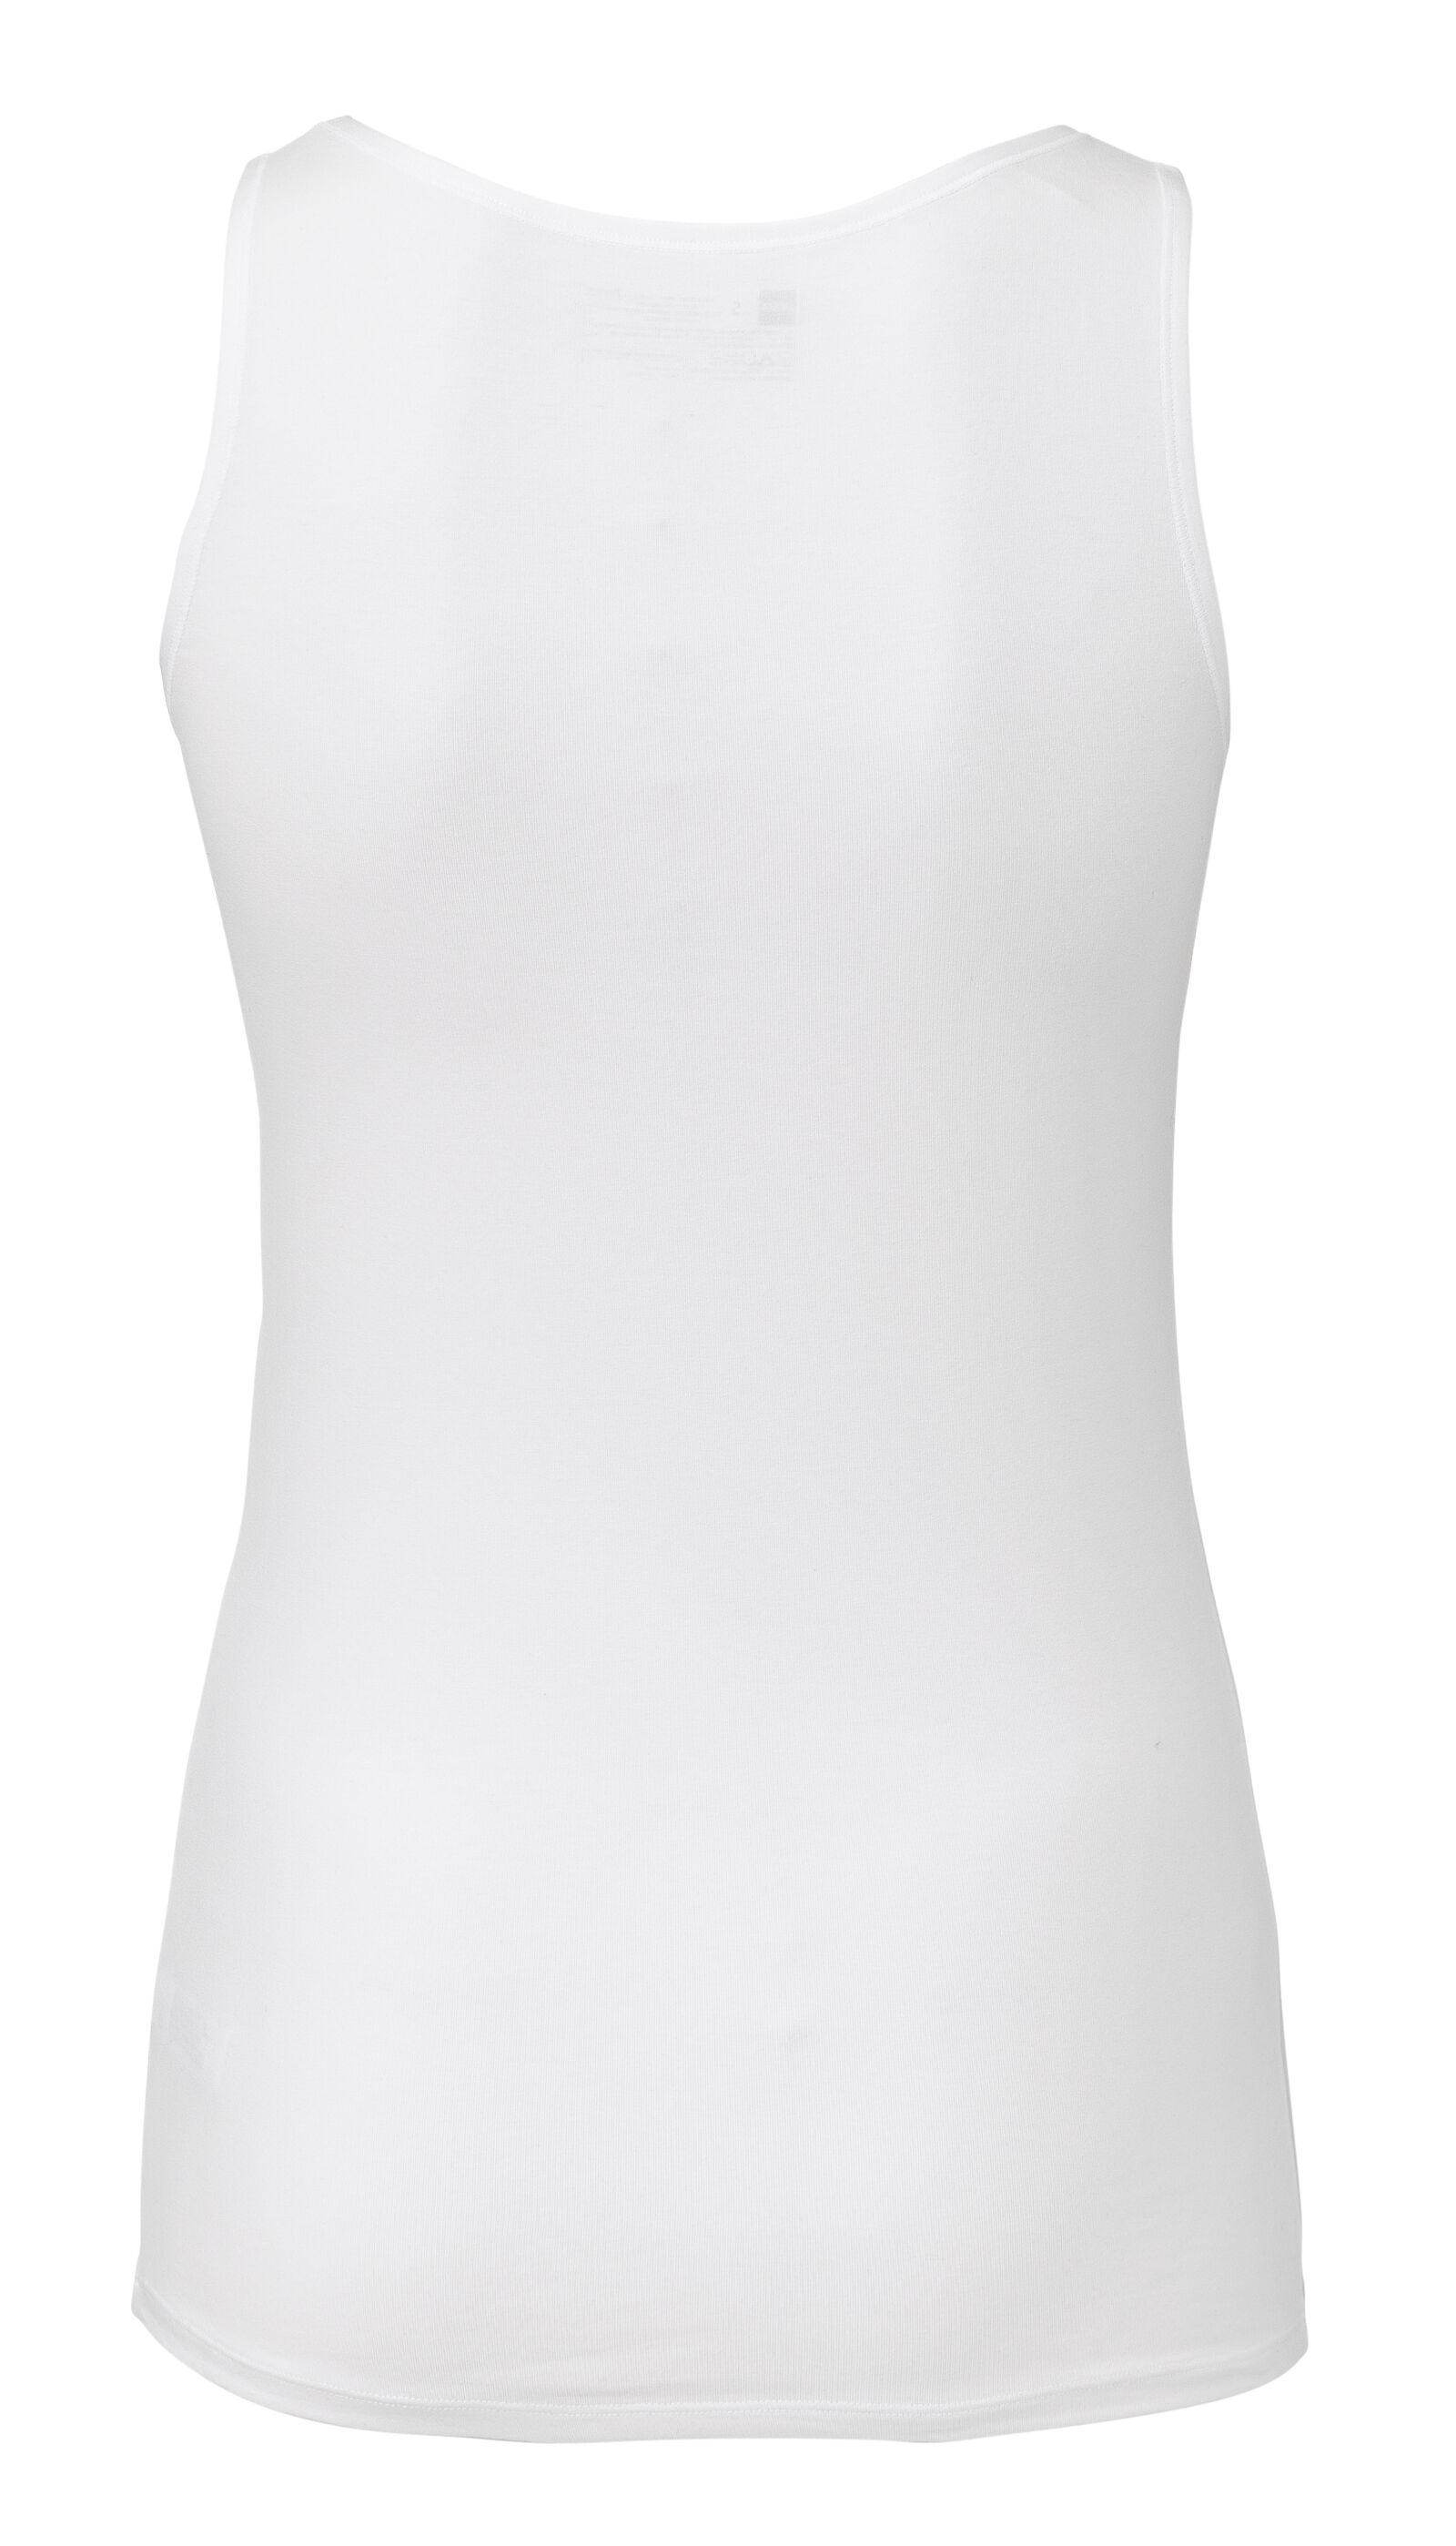 débardeur femme - real lasting cotton blanc L - 19630328 - HEMA